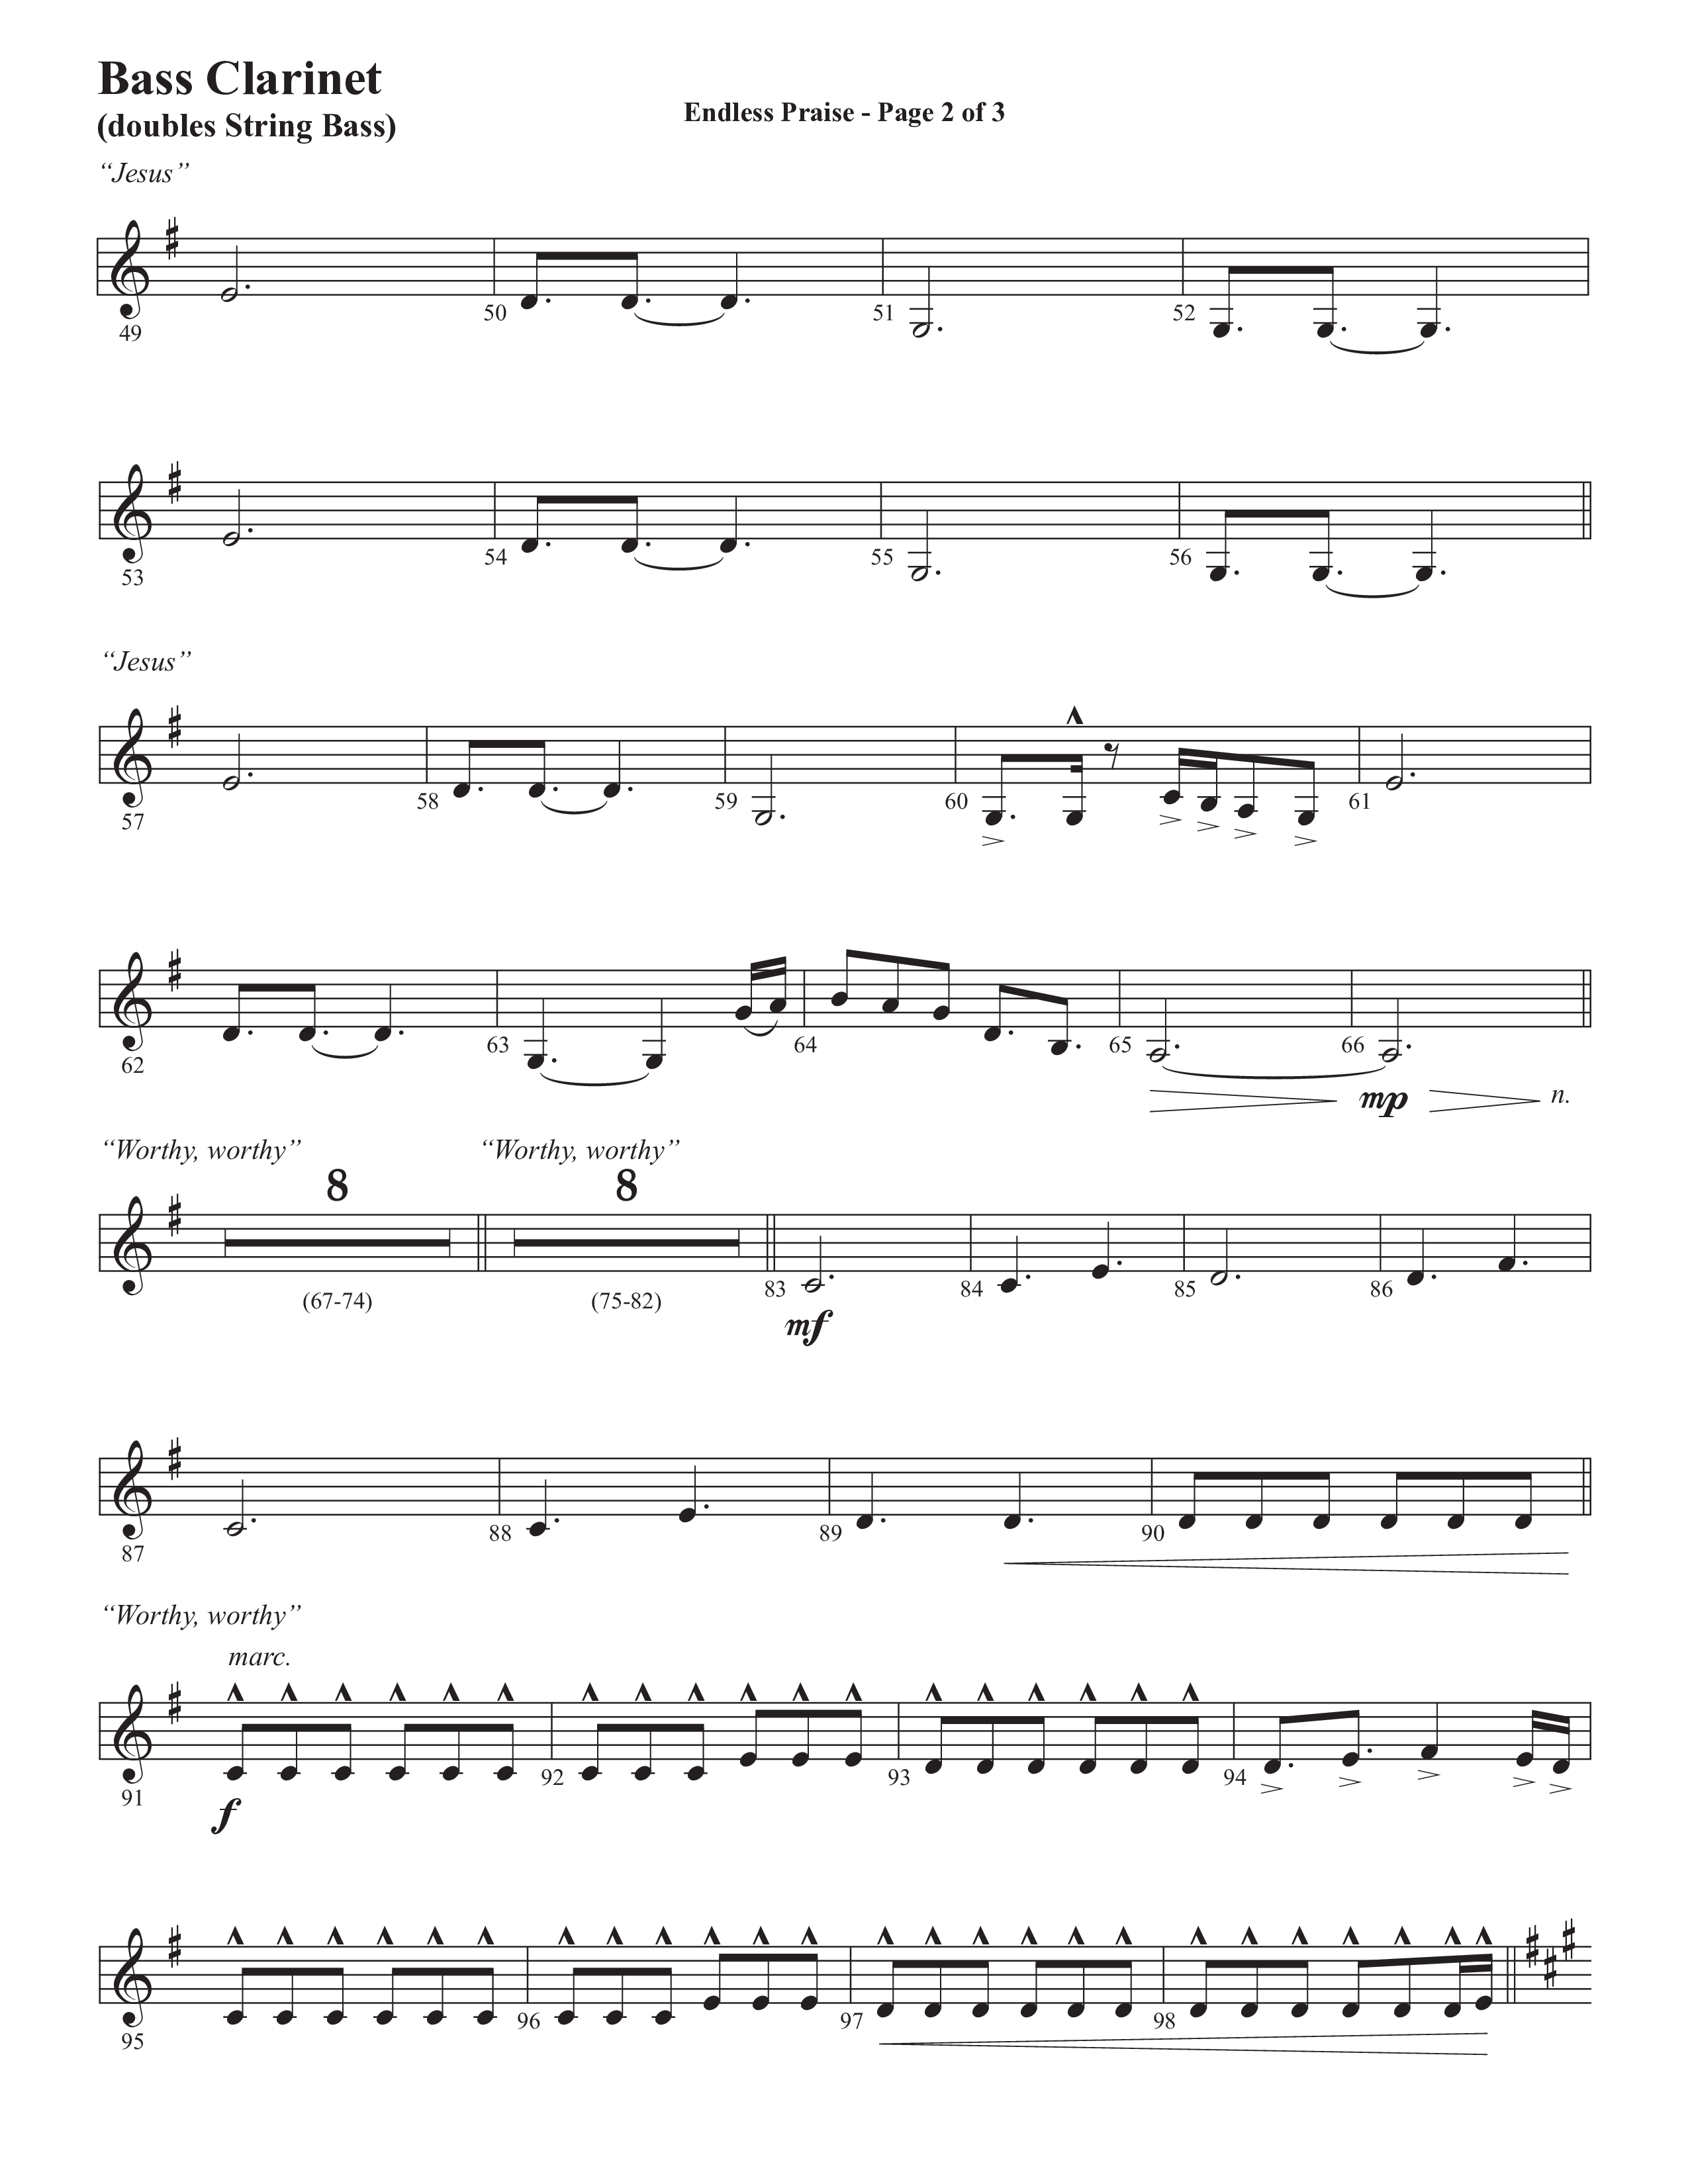 Endless Praise (Choral Anthem SATB) Bass Clarinet (Semsen Music / Arr. Daniel Semsen)